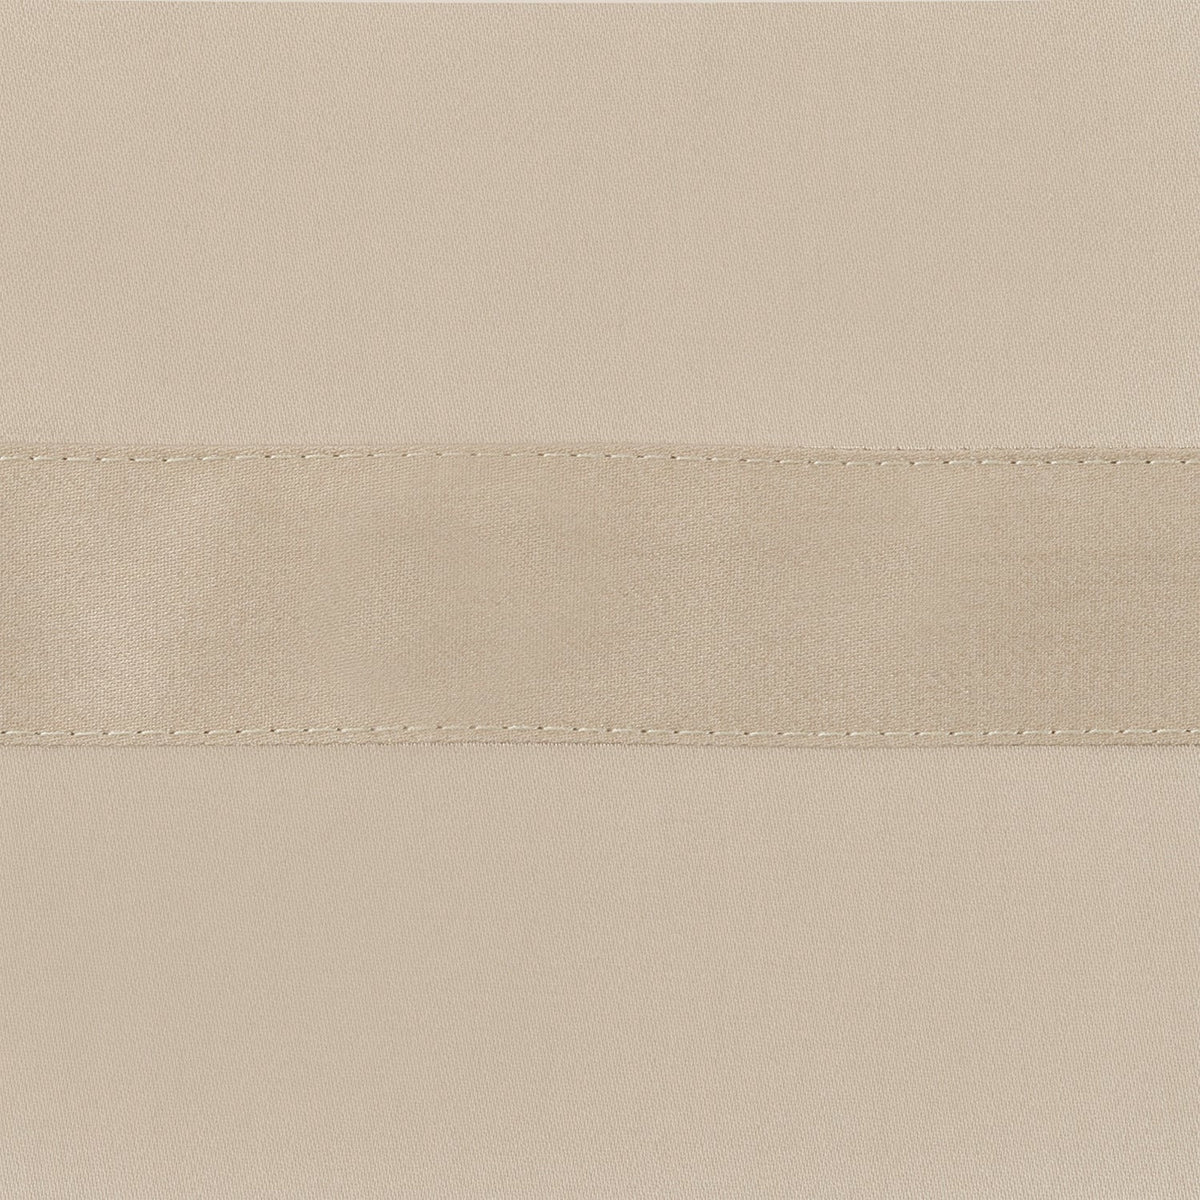 Matouk Nocturne Bedding Collection Khaki Swatch Fine Linens